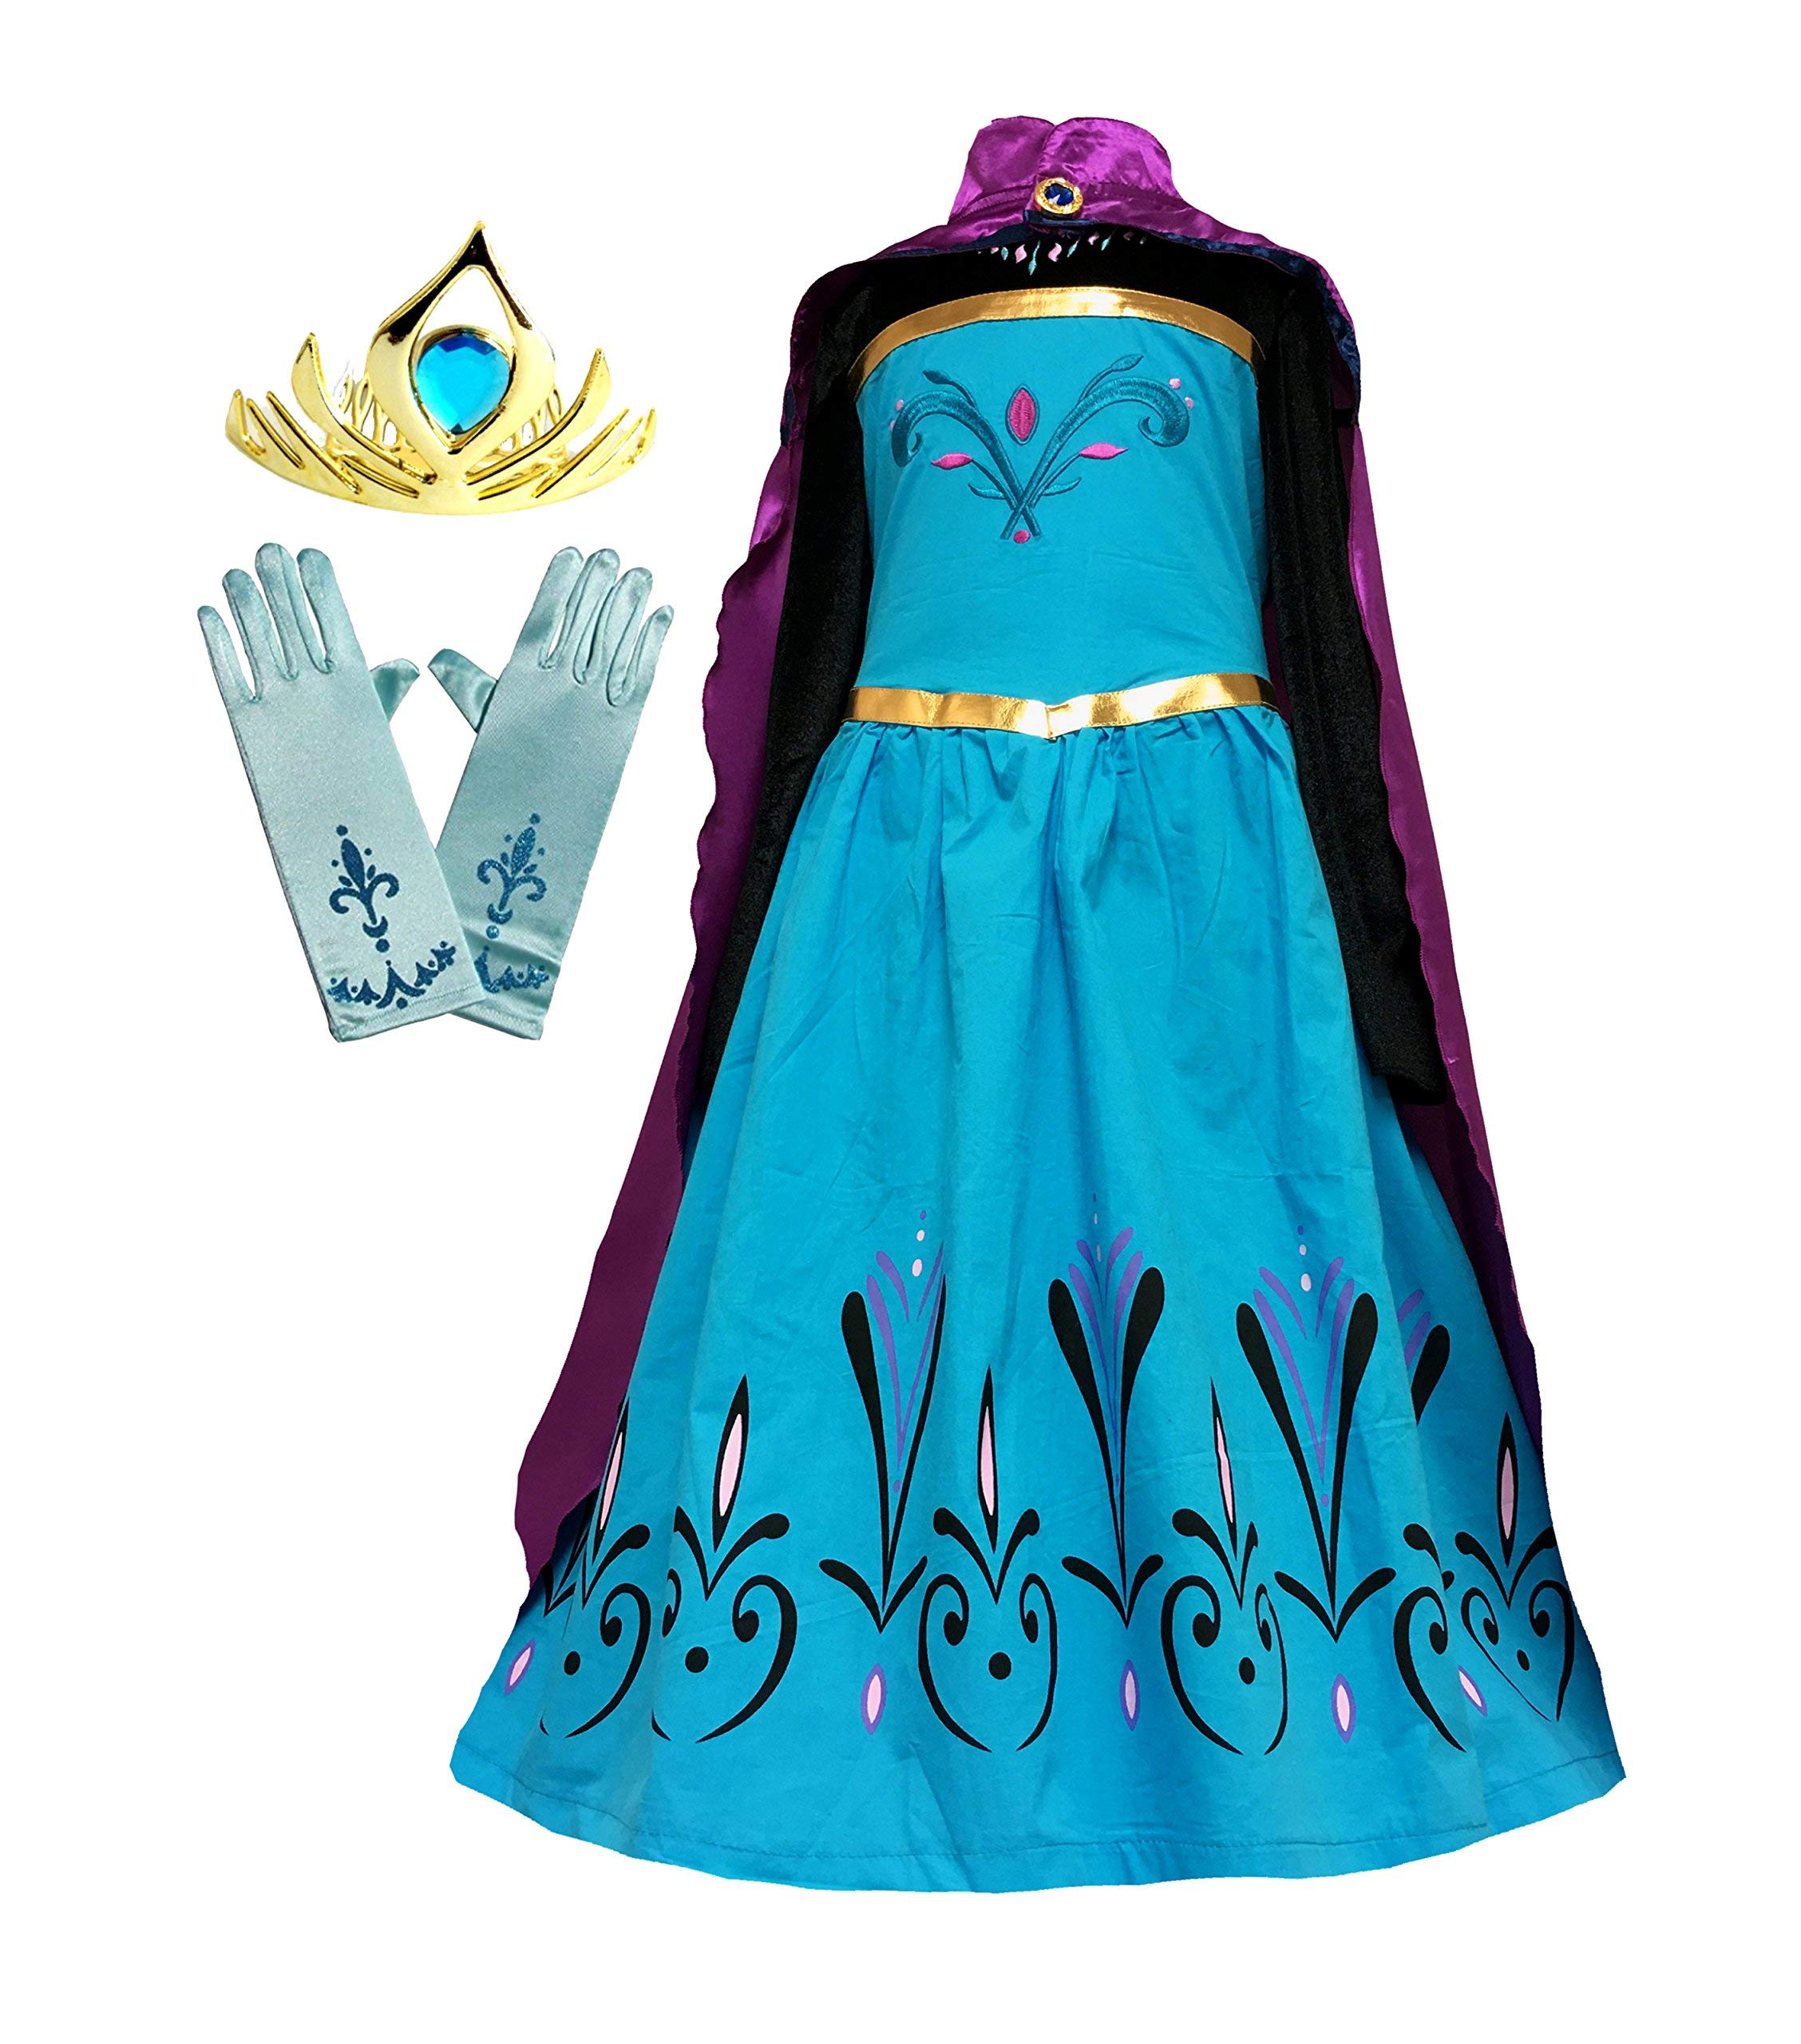 Cokos Box Girls Coronation Dress Costume Cape Gloves Tiara Crown Accessories Kids Set (5 Years, Blue-Purple)